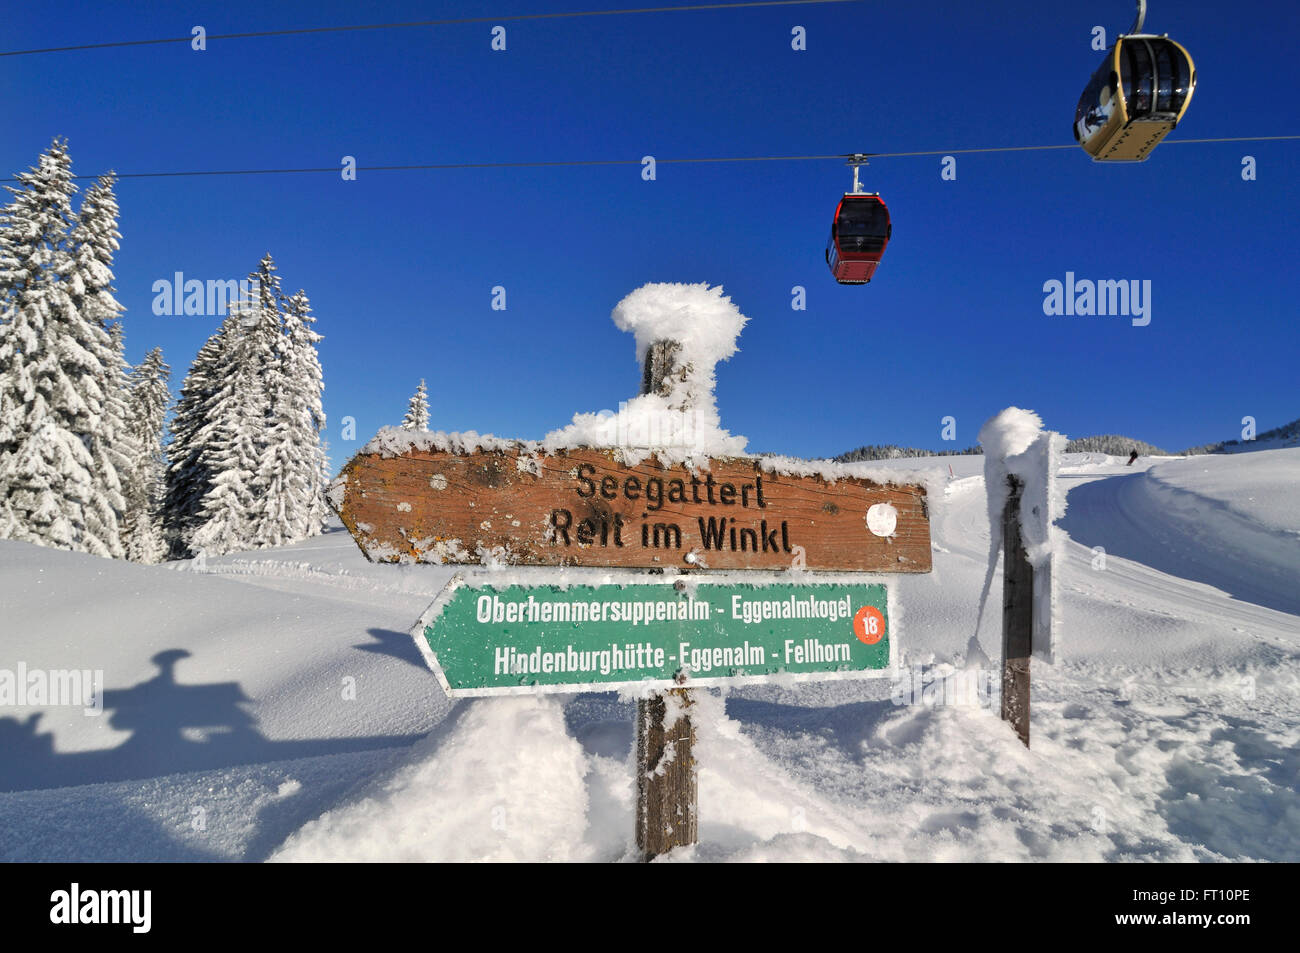 Overhead cable car, Winklmoosalm ski area, Reit im Winkl, Chiemgau, Bavaria, Germany Stock Photo